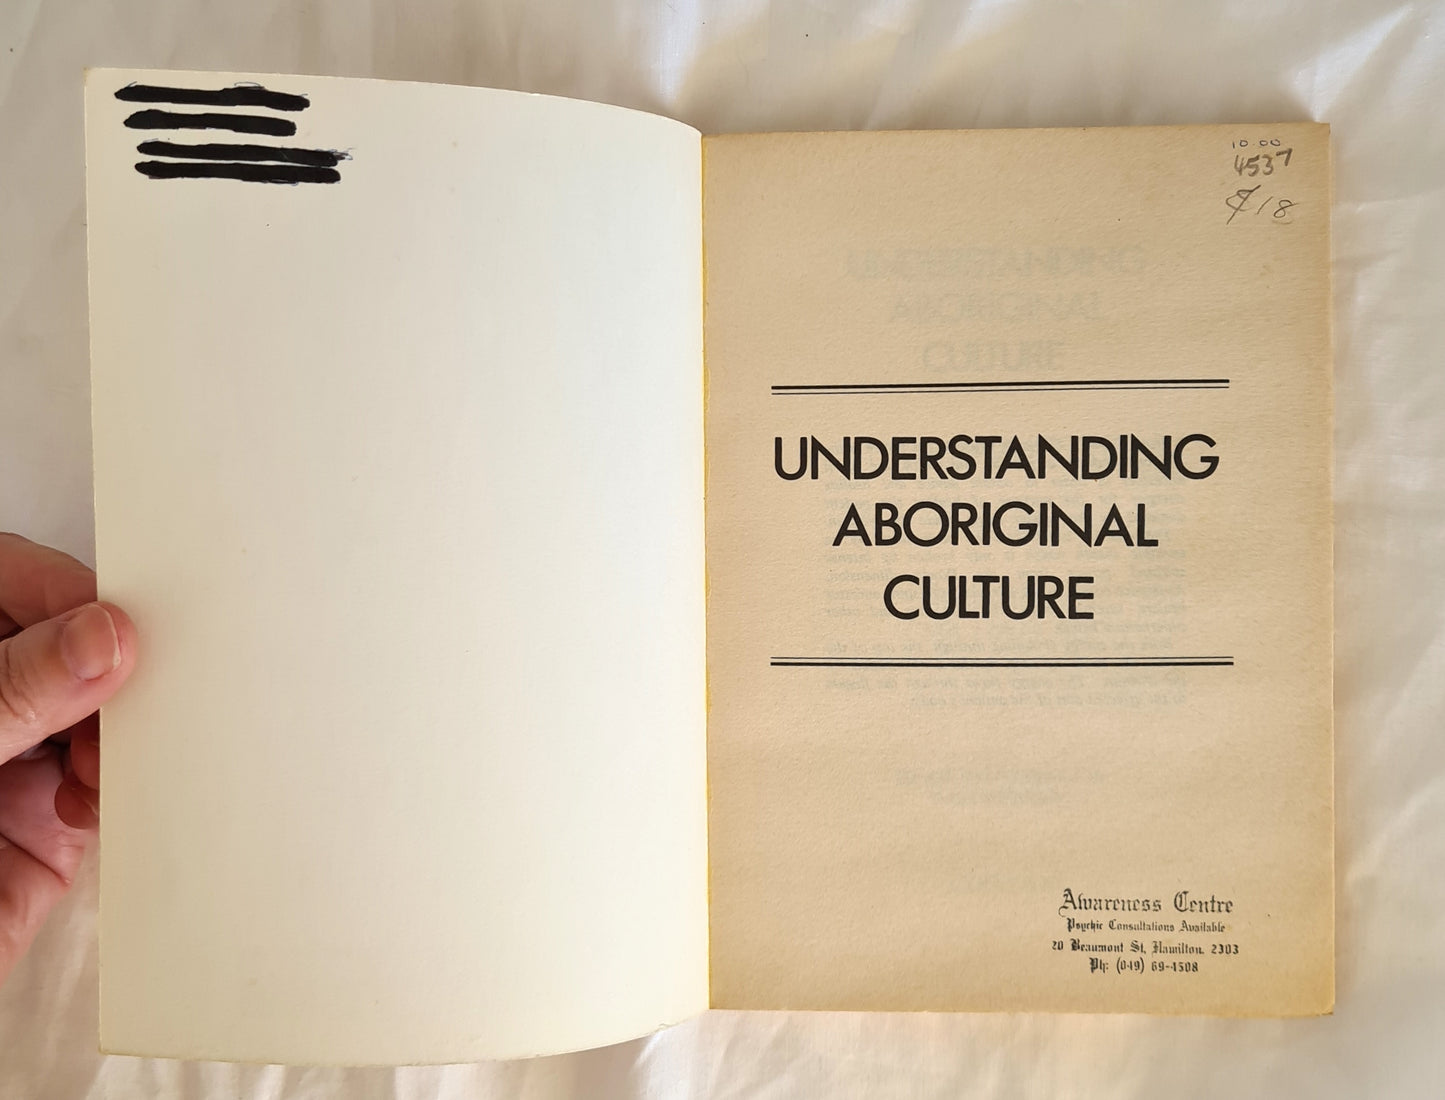 Understanding Aboriginal Culture by Cyril Havecker